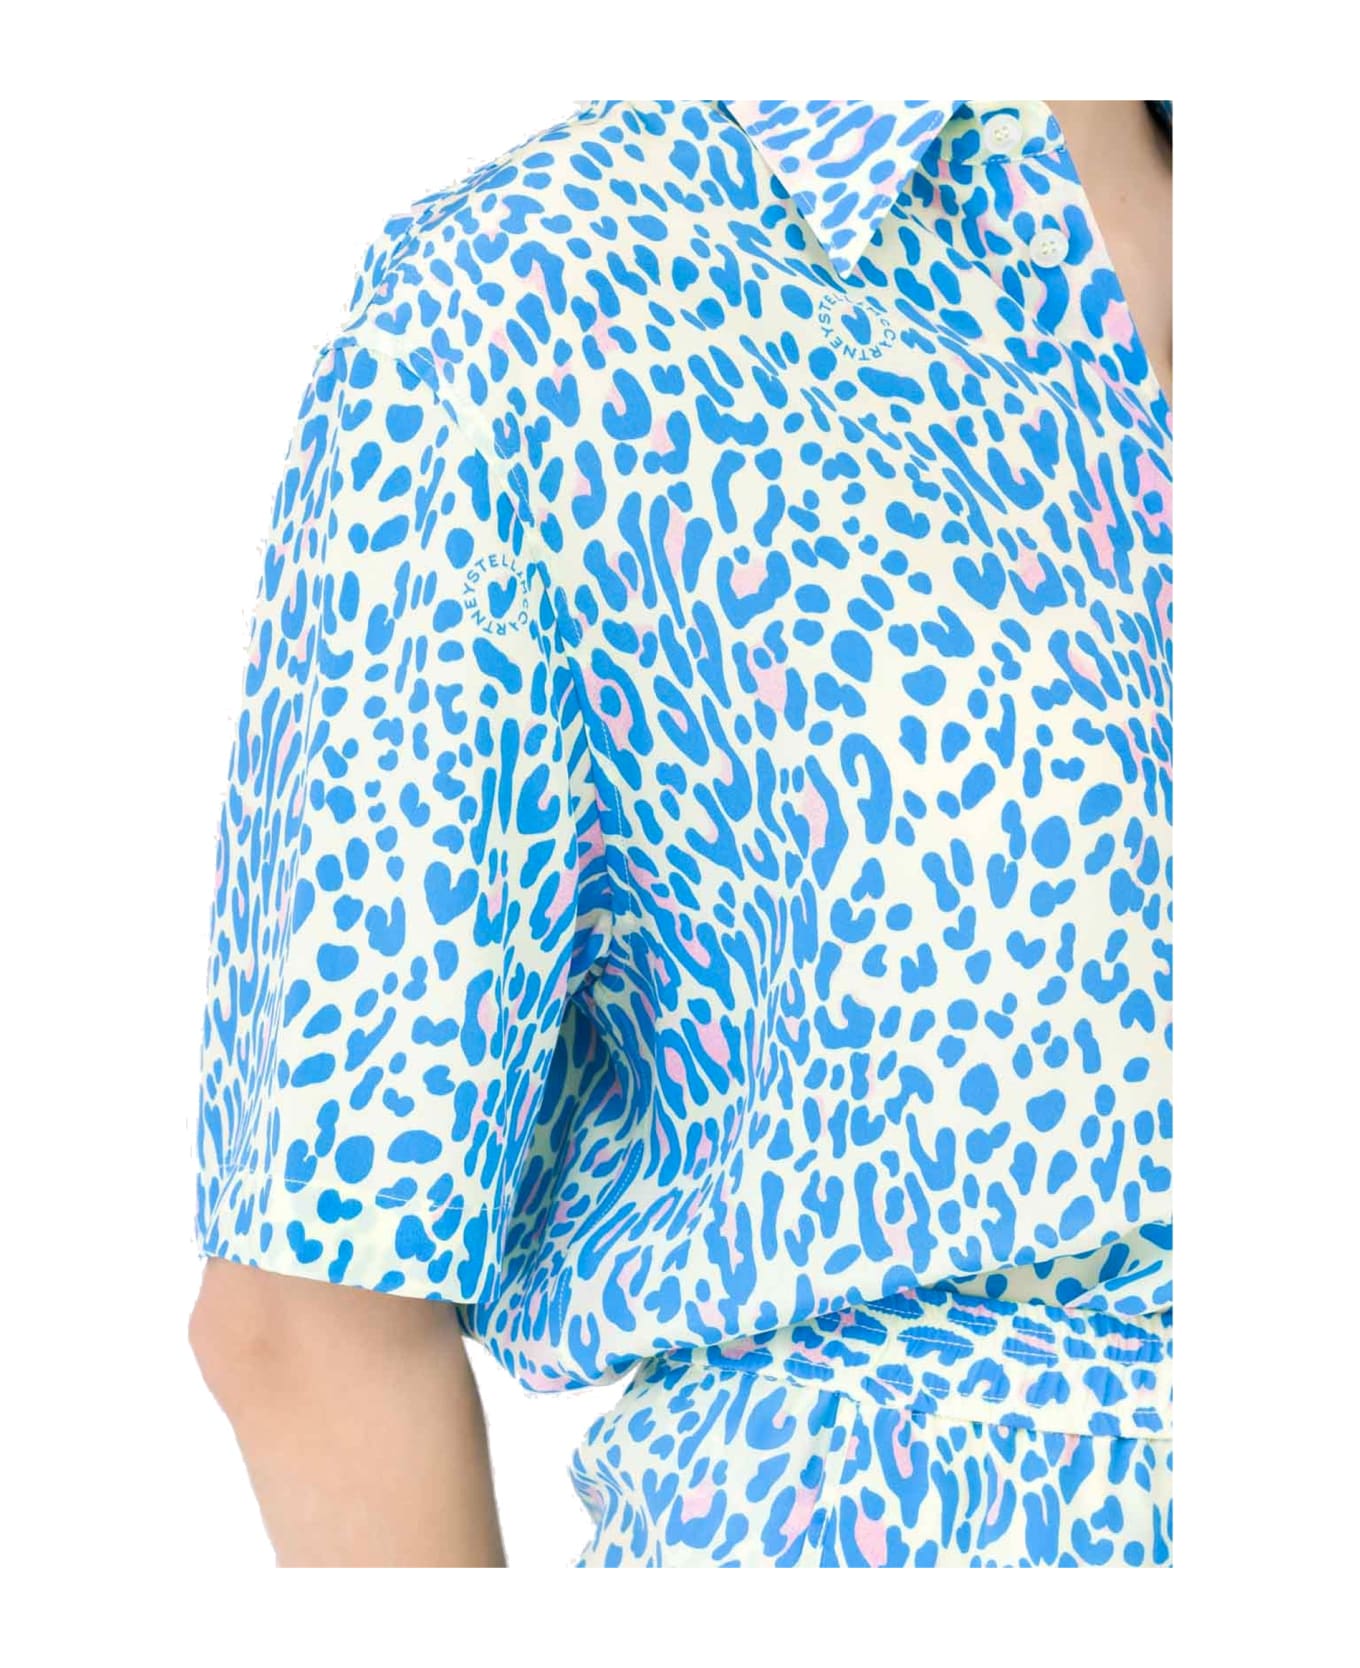 Stella McCartney Animal Print Shirt - Blue